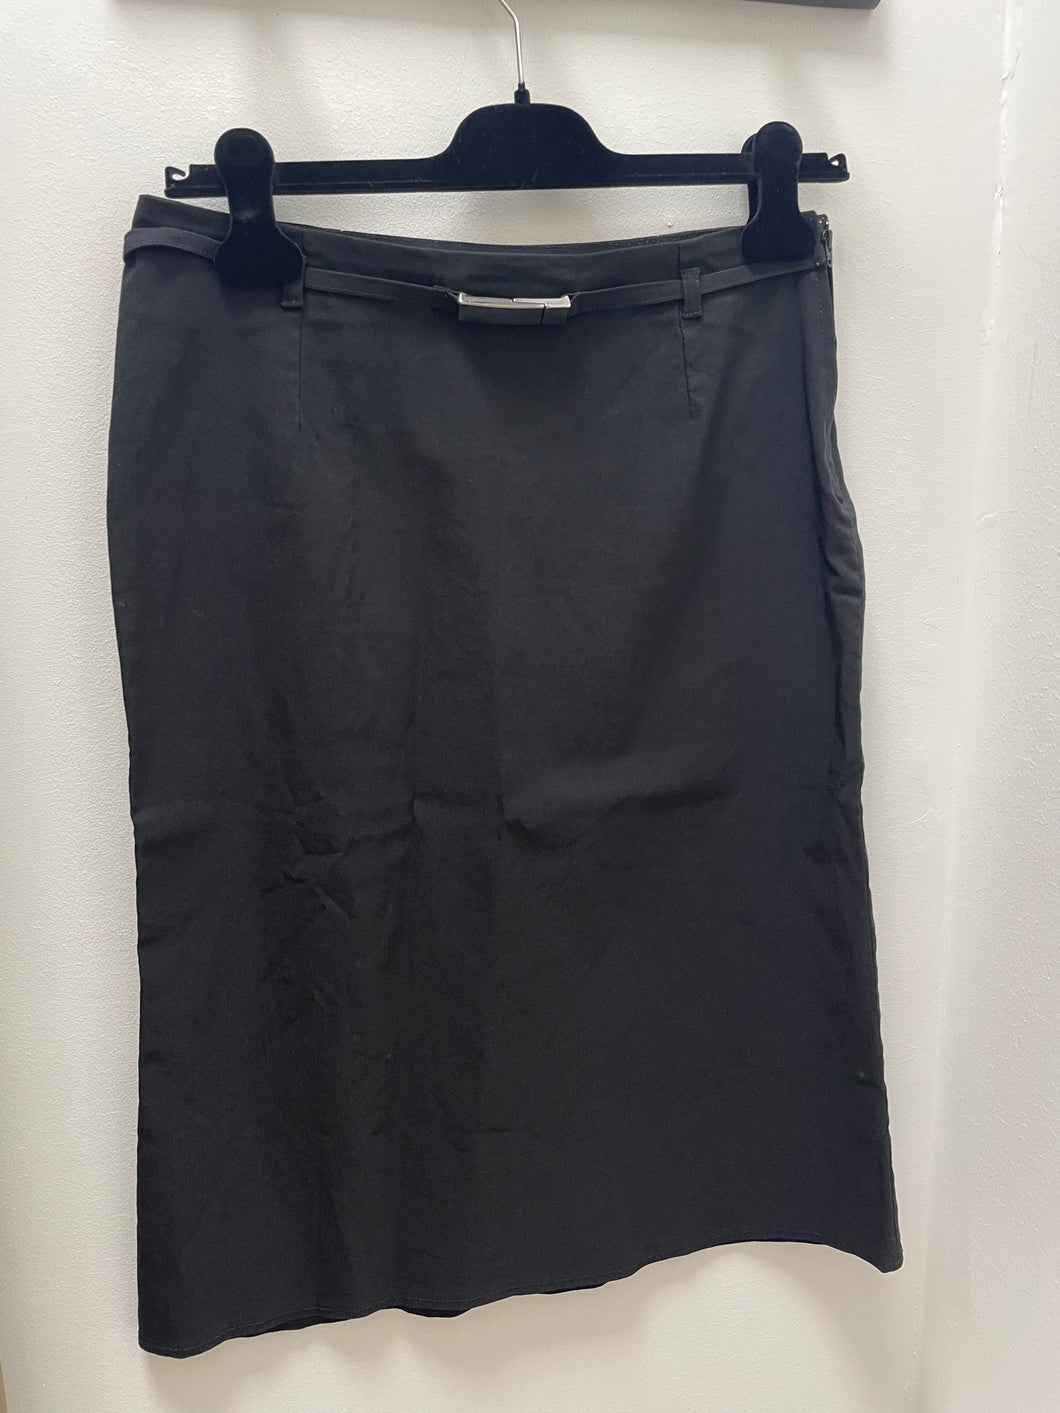 Dam kjol svart Vero Moda 38